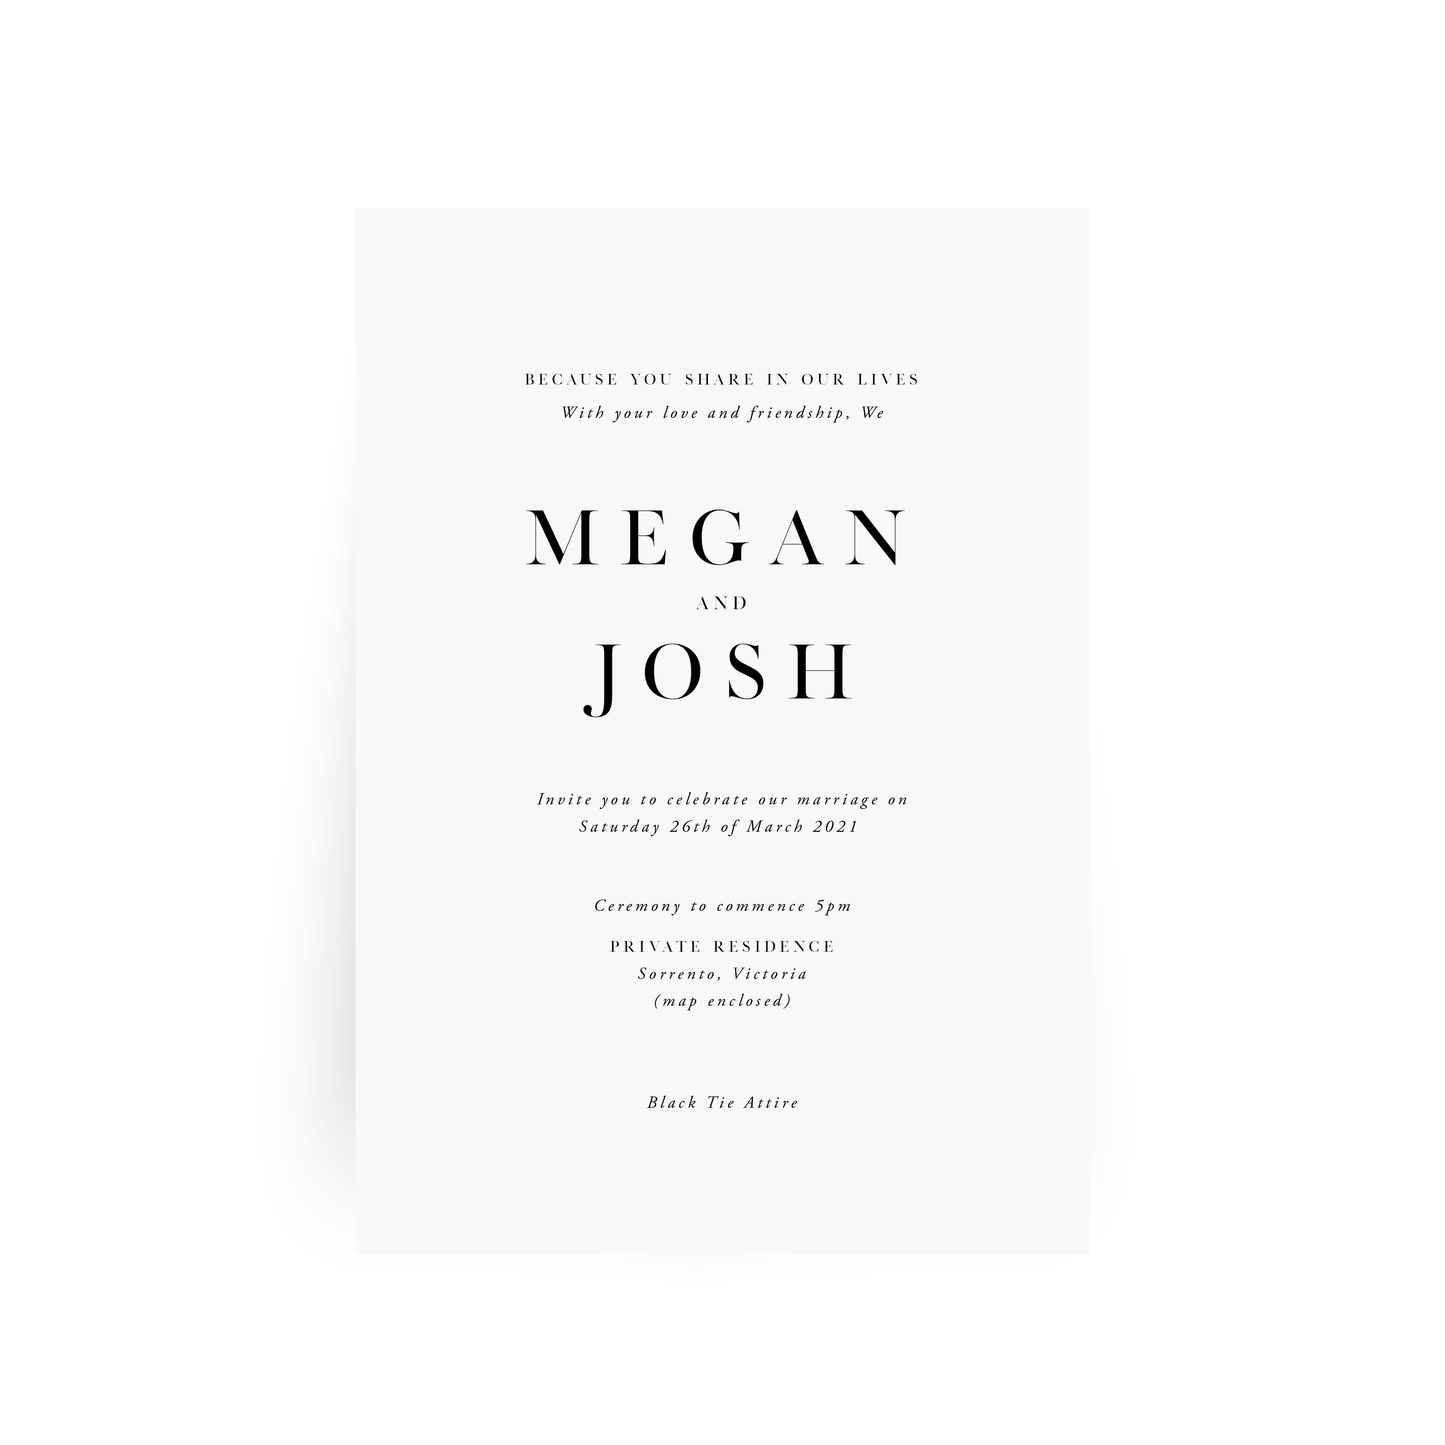 'Megan' Wedding Invitation